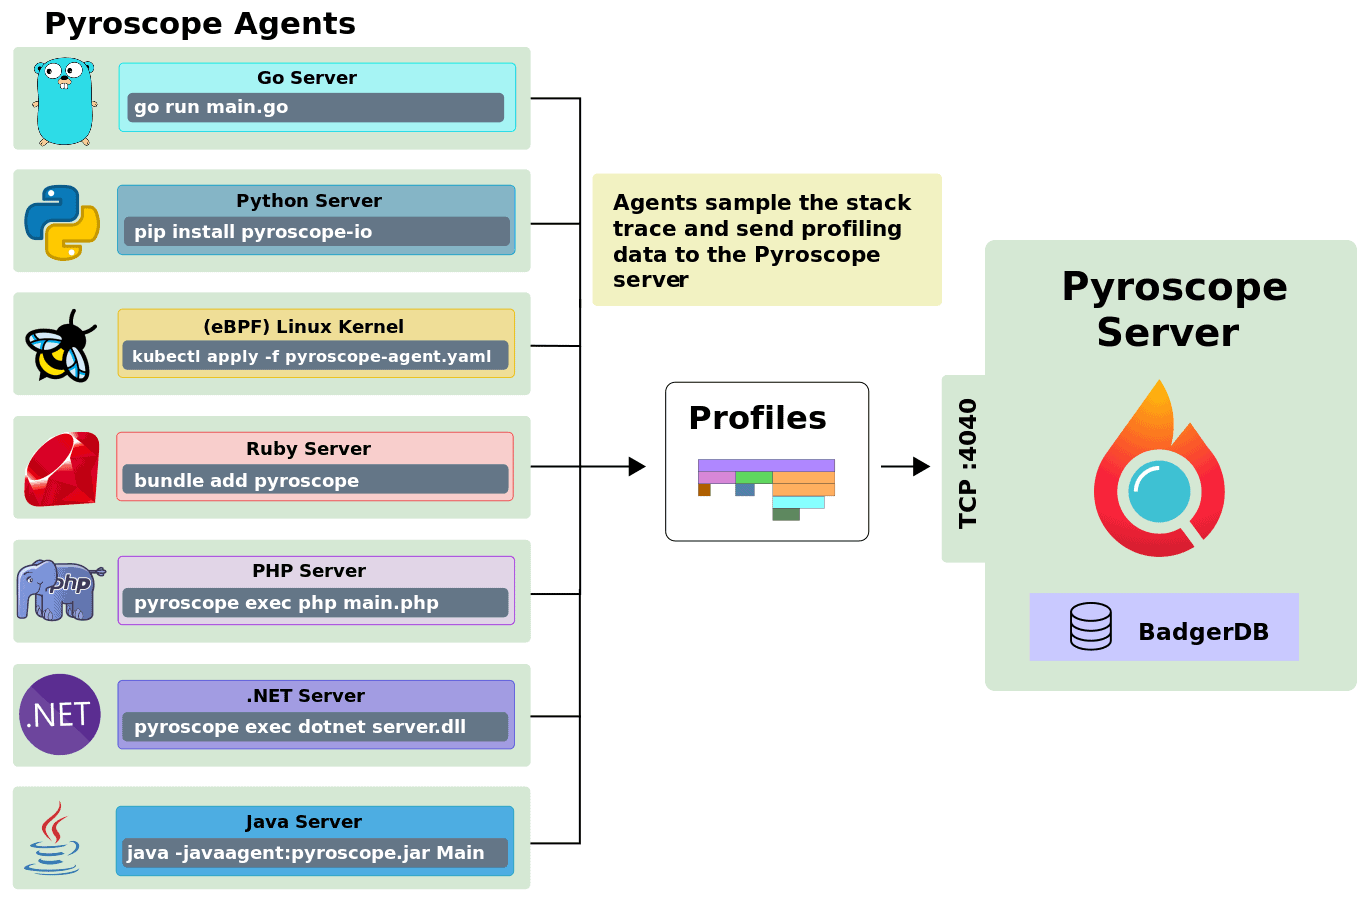 Diagram flow showing Pyroscope Agents profiler